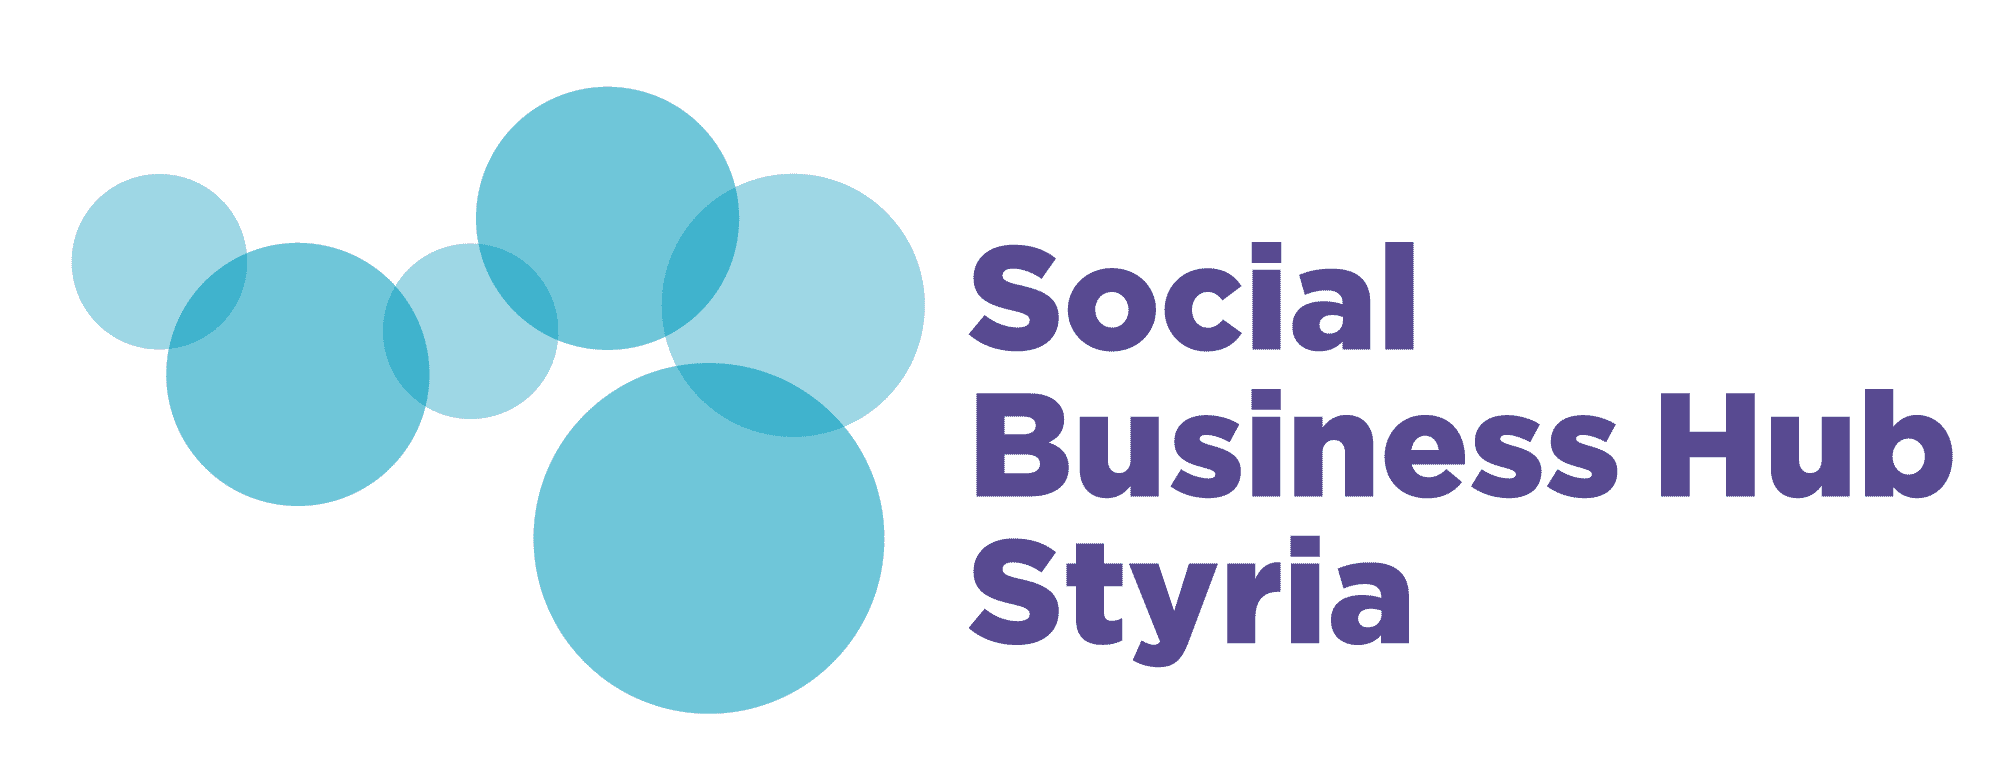 Logo of Social Business Hub Styria